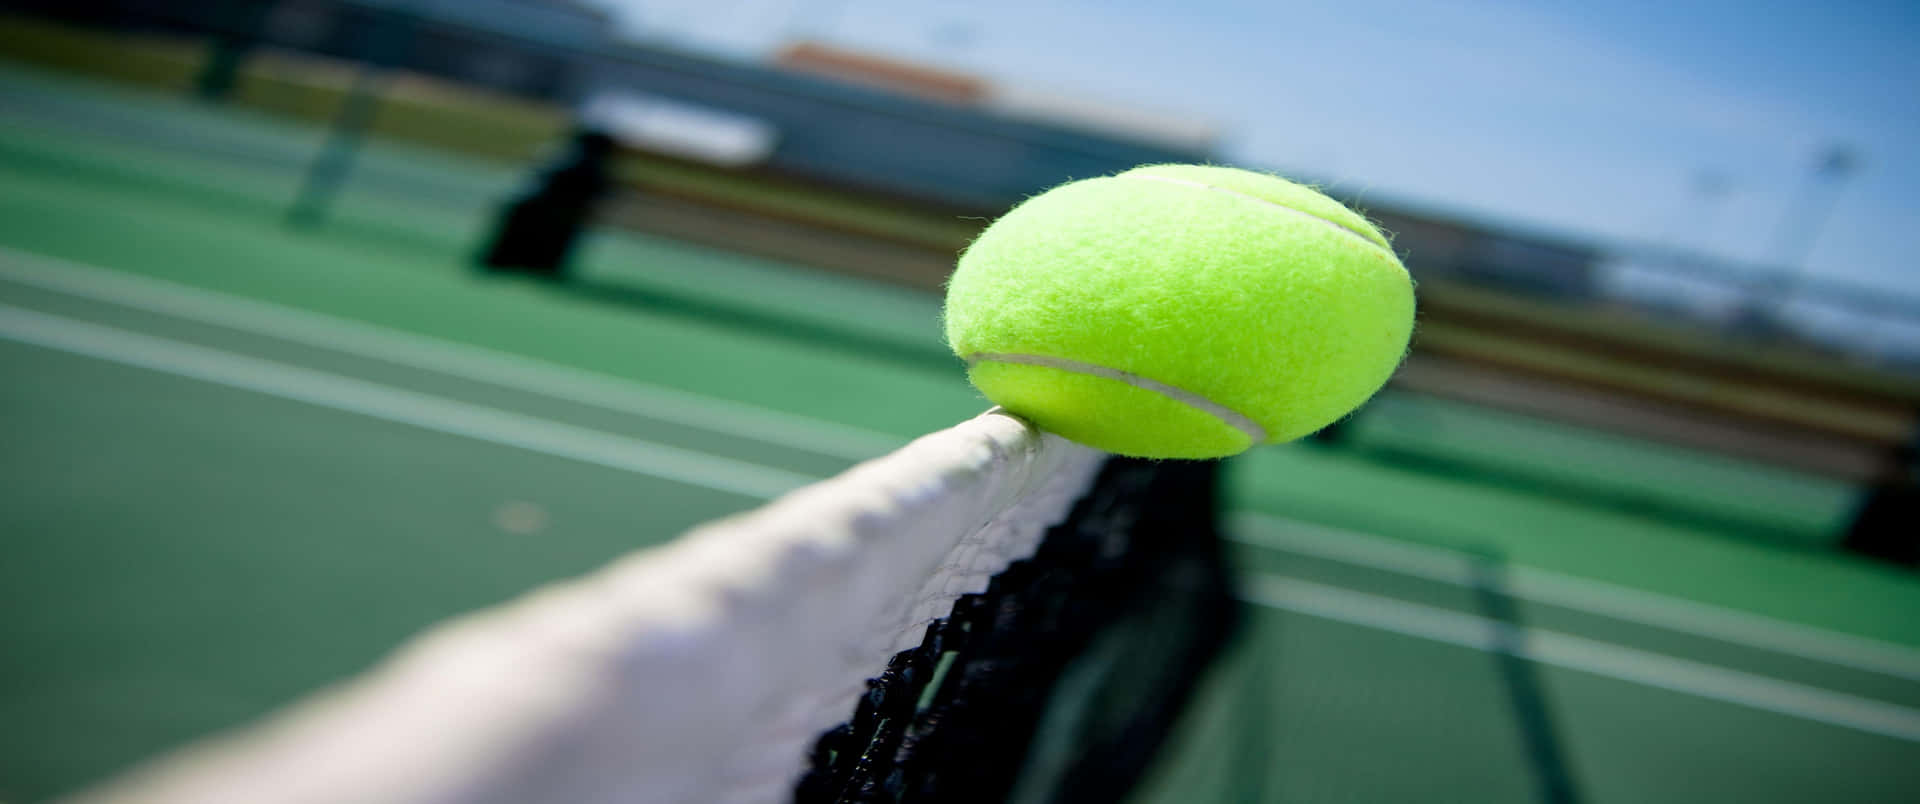 Perfektinramad Tennisbana